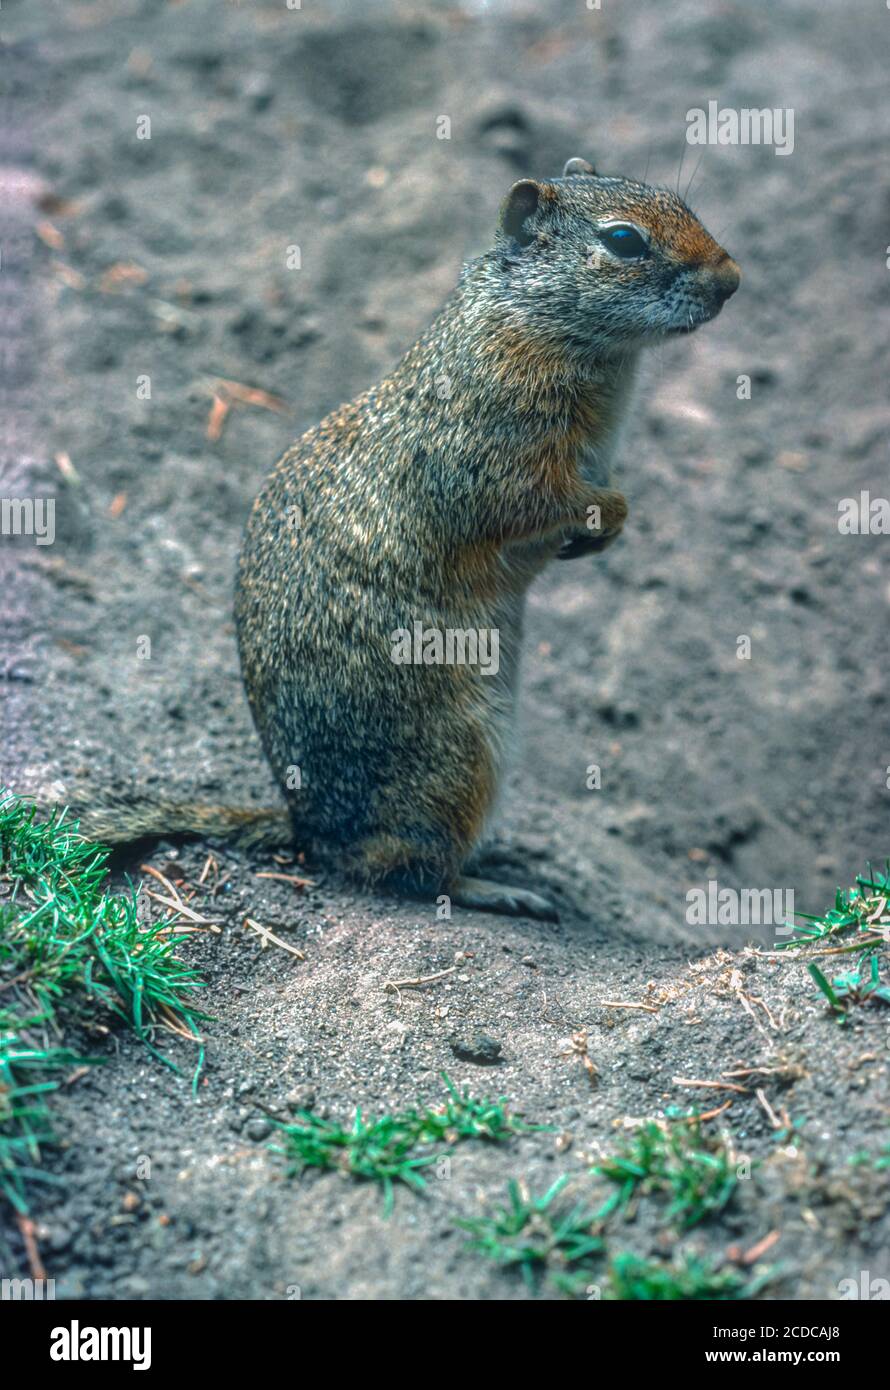 Uinta Ground Squirrel (Urocitellus armatus), früher (Citellus armatus), in der Nähe des Baus, Wyoming USA . Aus original Kodachrome 64 Transparenz. Stockfoto